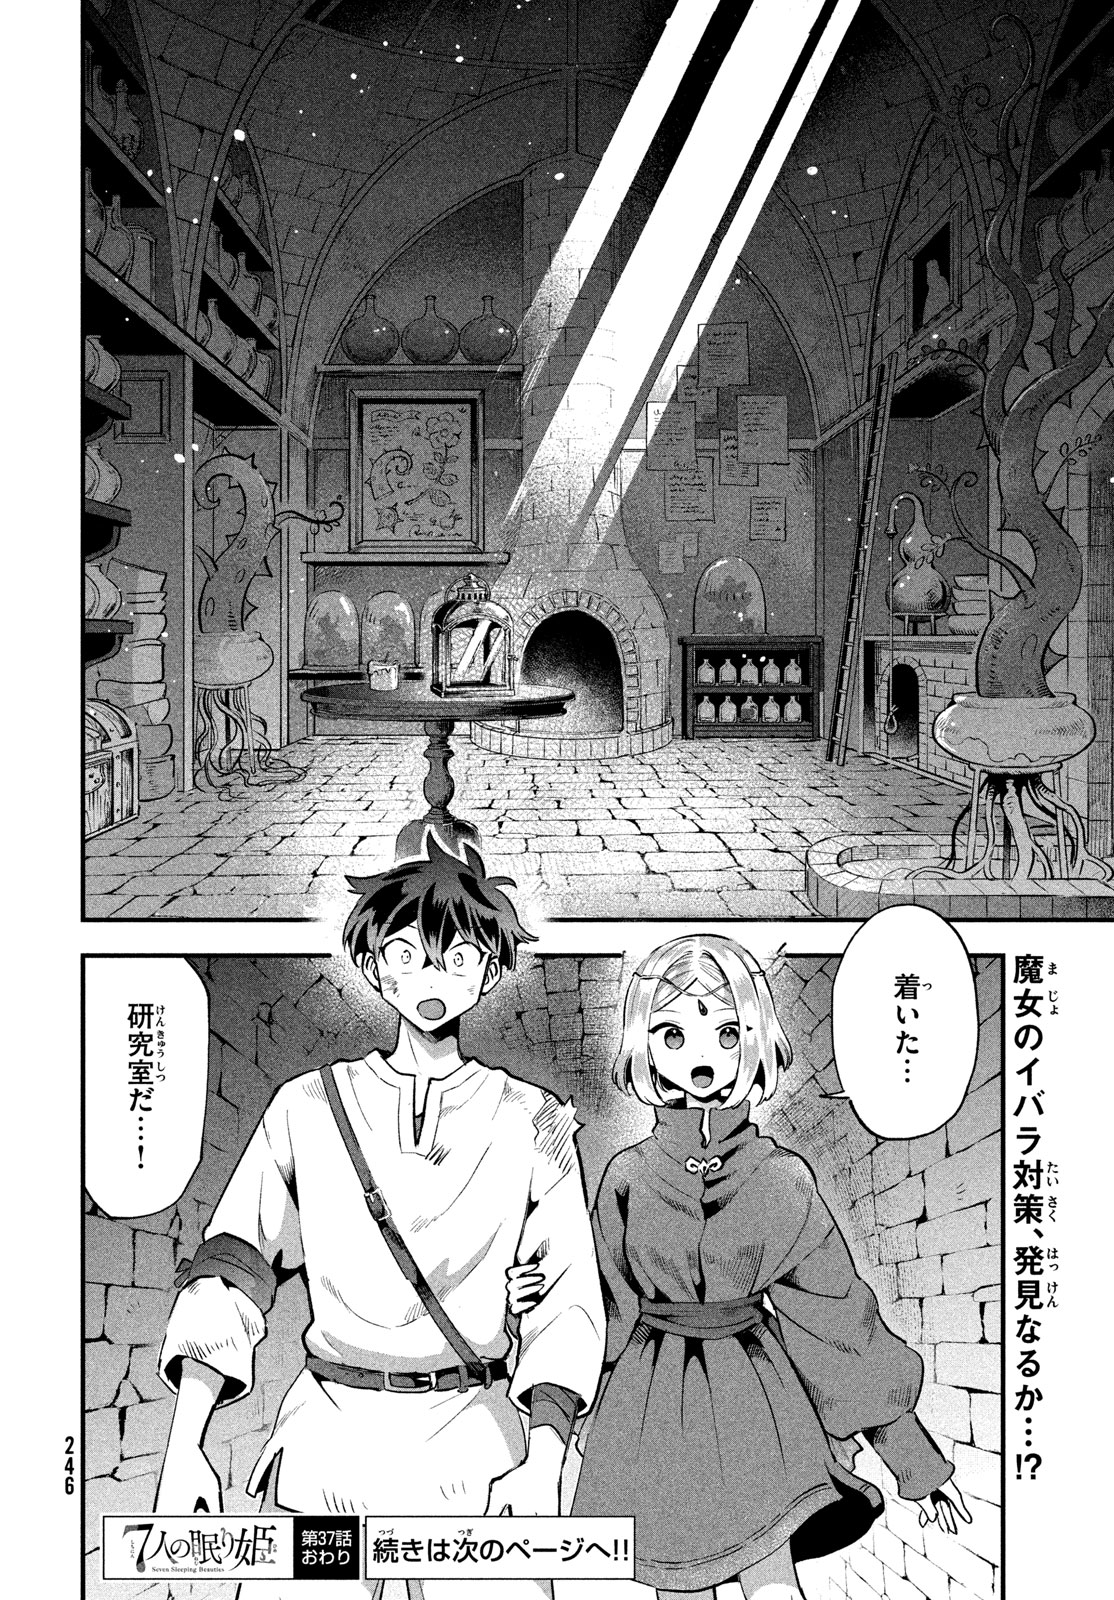 7-nin no Nemuri Hime - Chapter 37 - Page 14